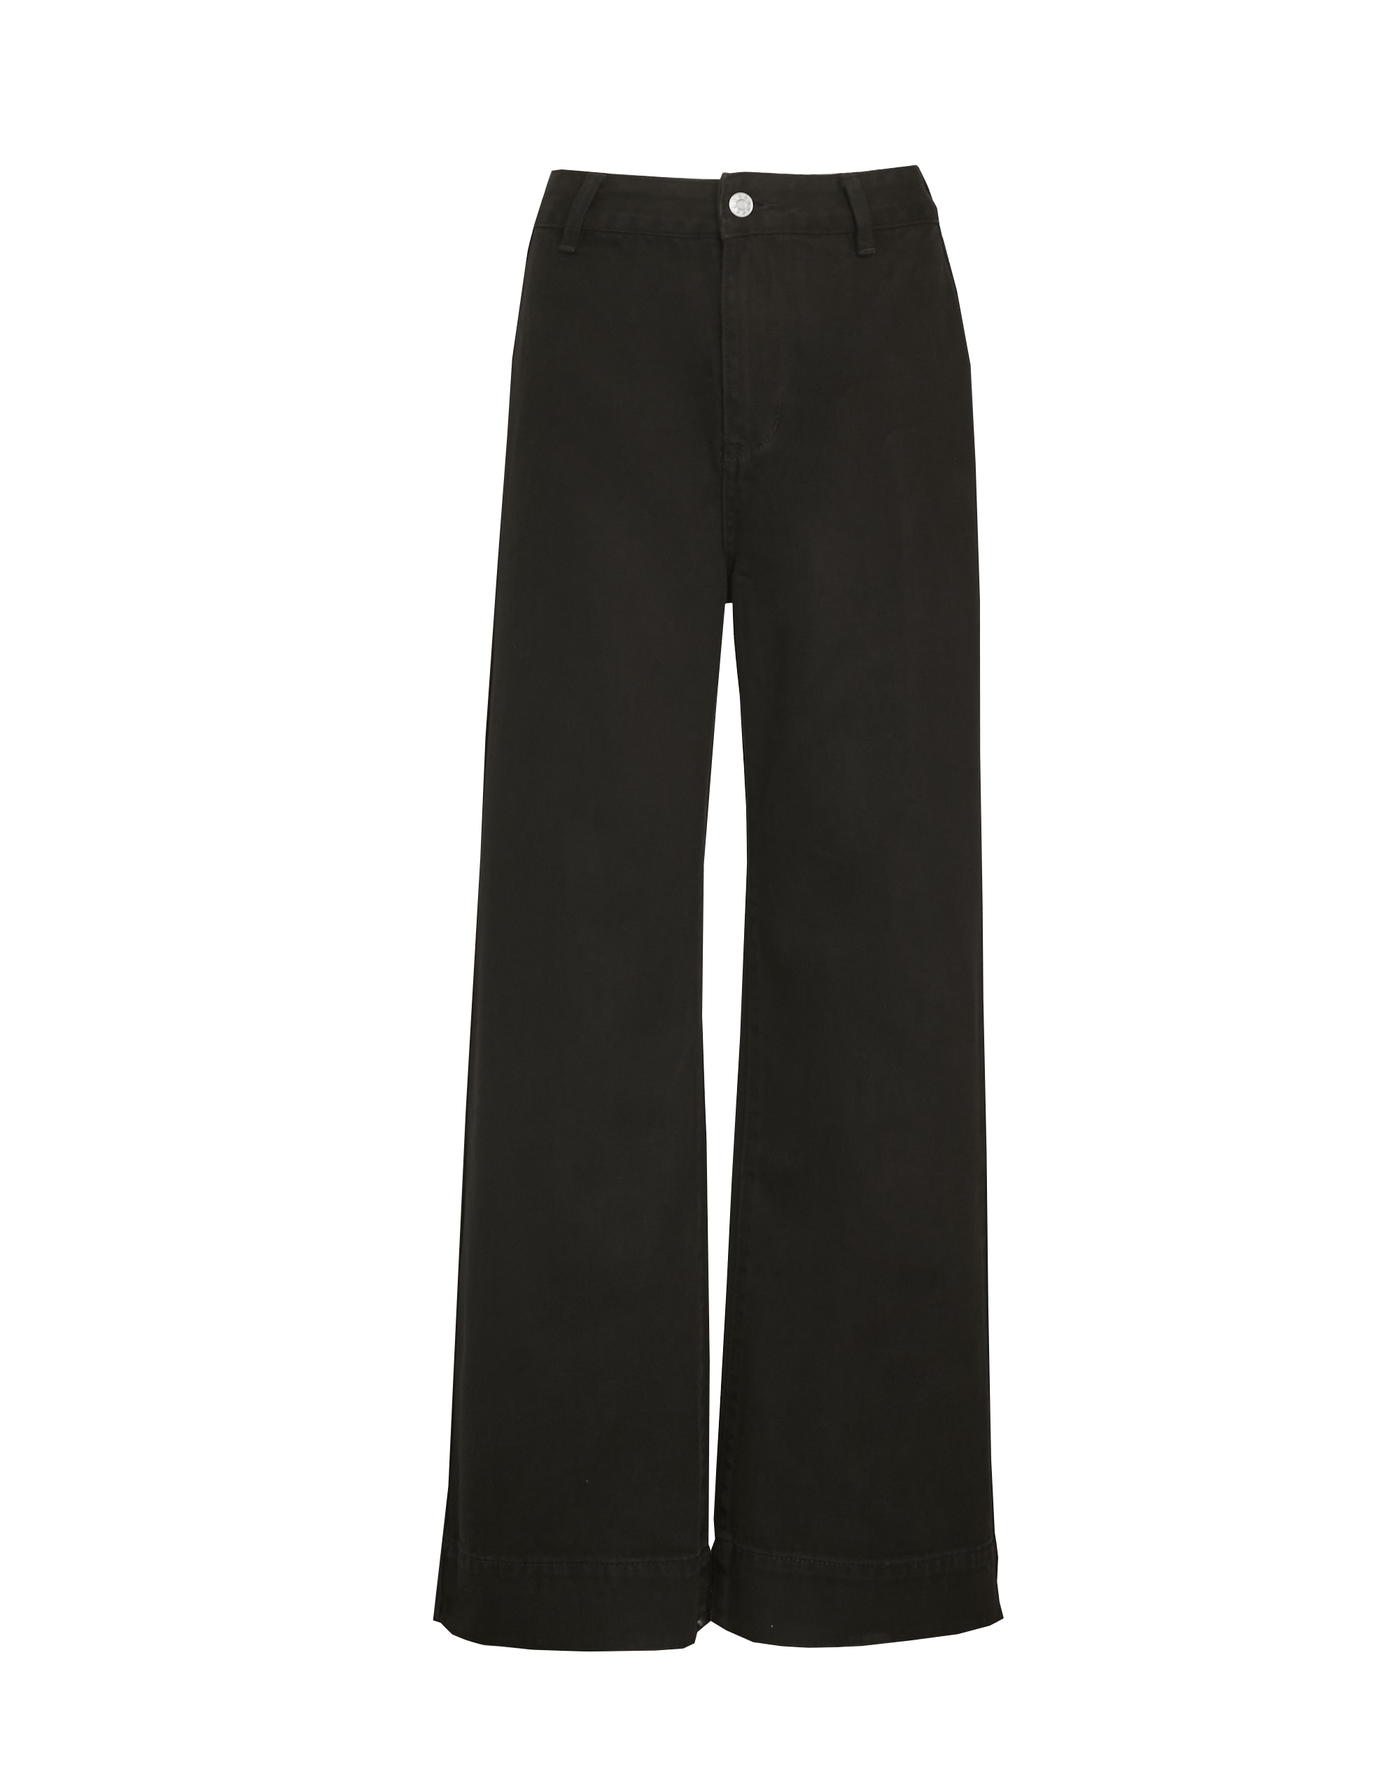 Antoni Jeans (Black) - Wide Leg Black Jeans - Women's Pants - Charcoal Clothing